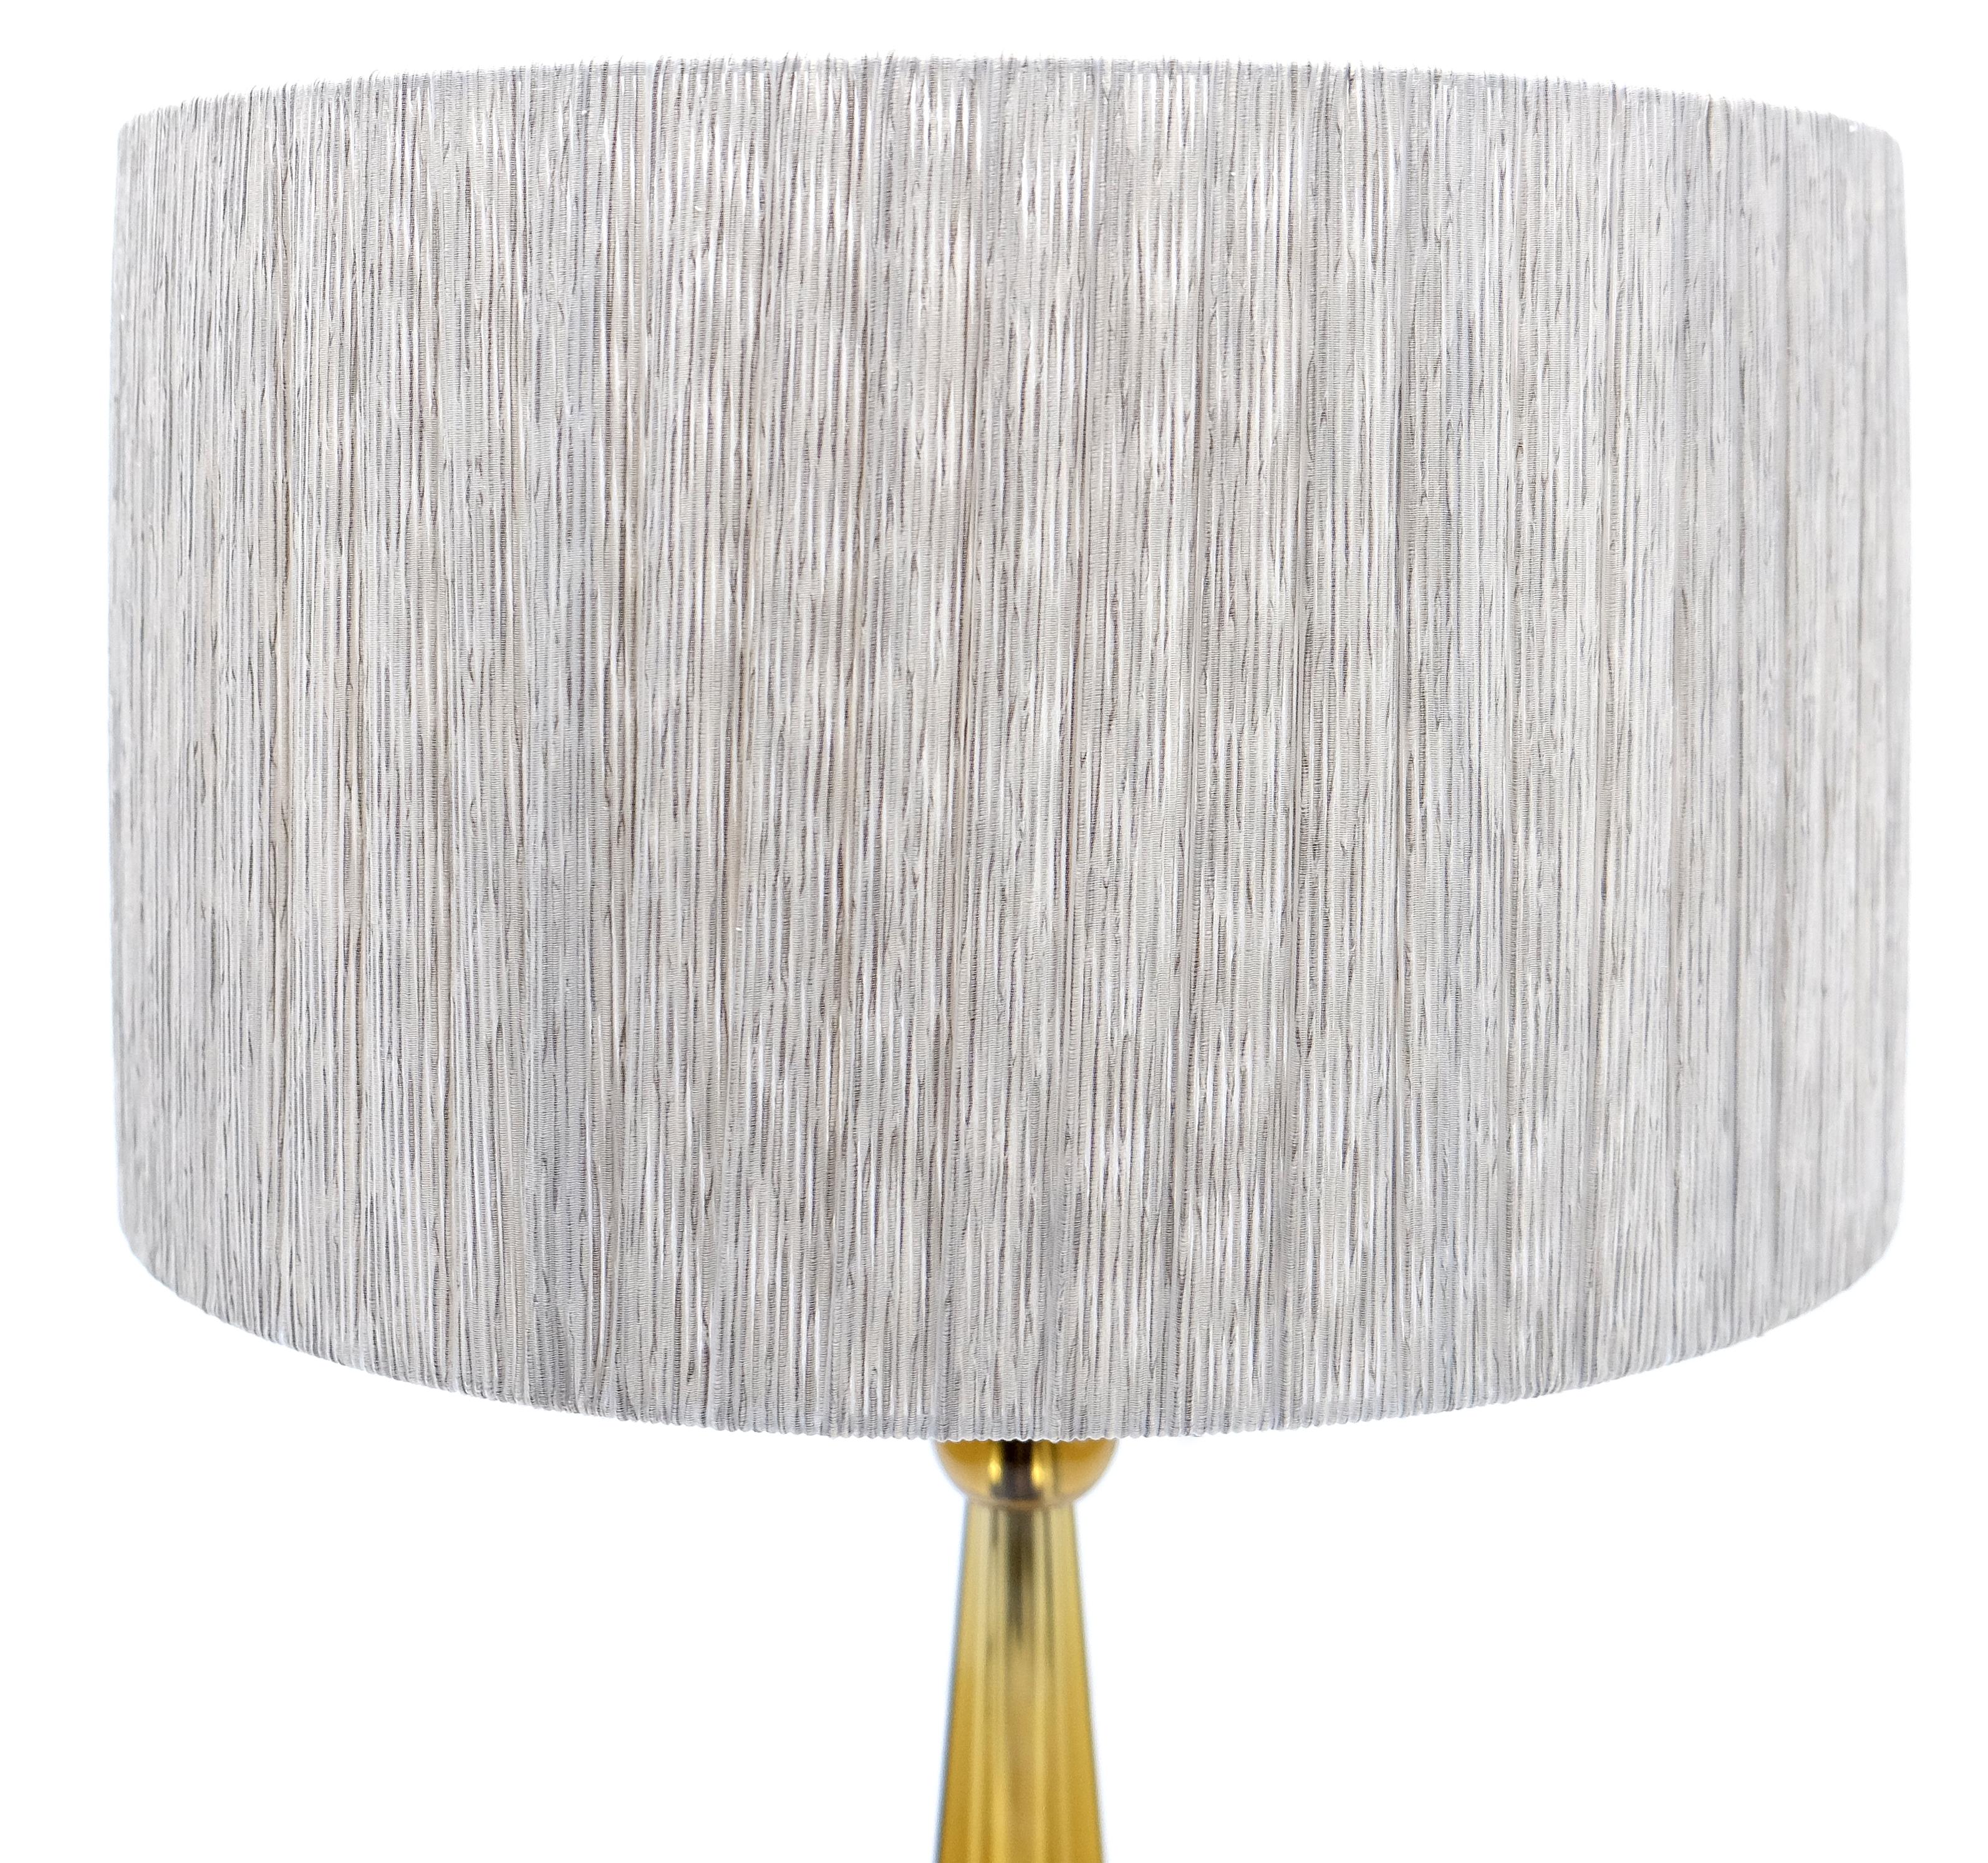 Contemporary Attilio Amato for Laudarte Srl Prisma Big Table Lamp, Pair Available For Sale